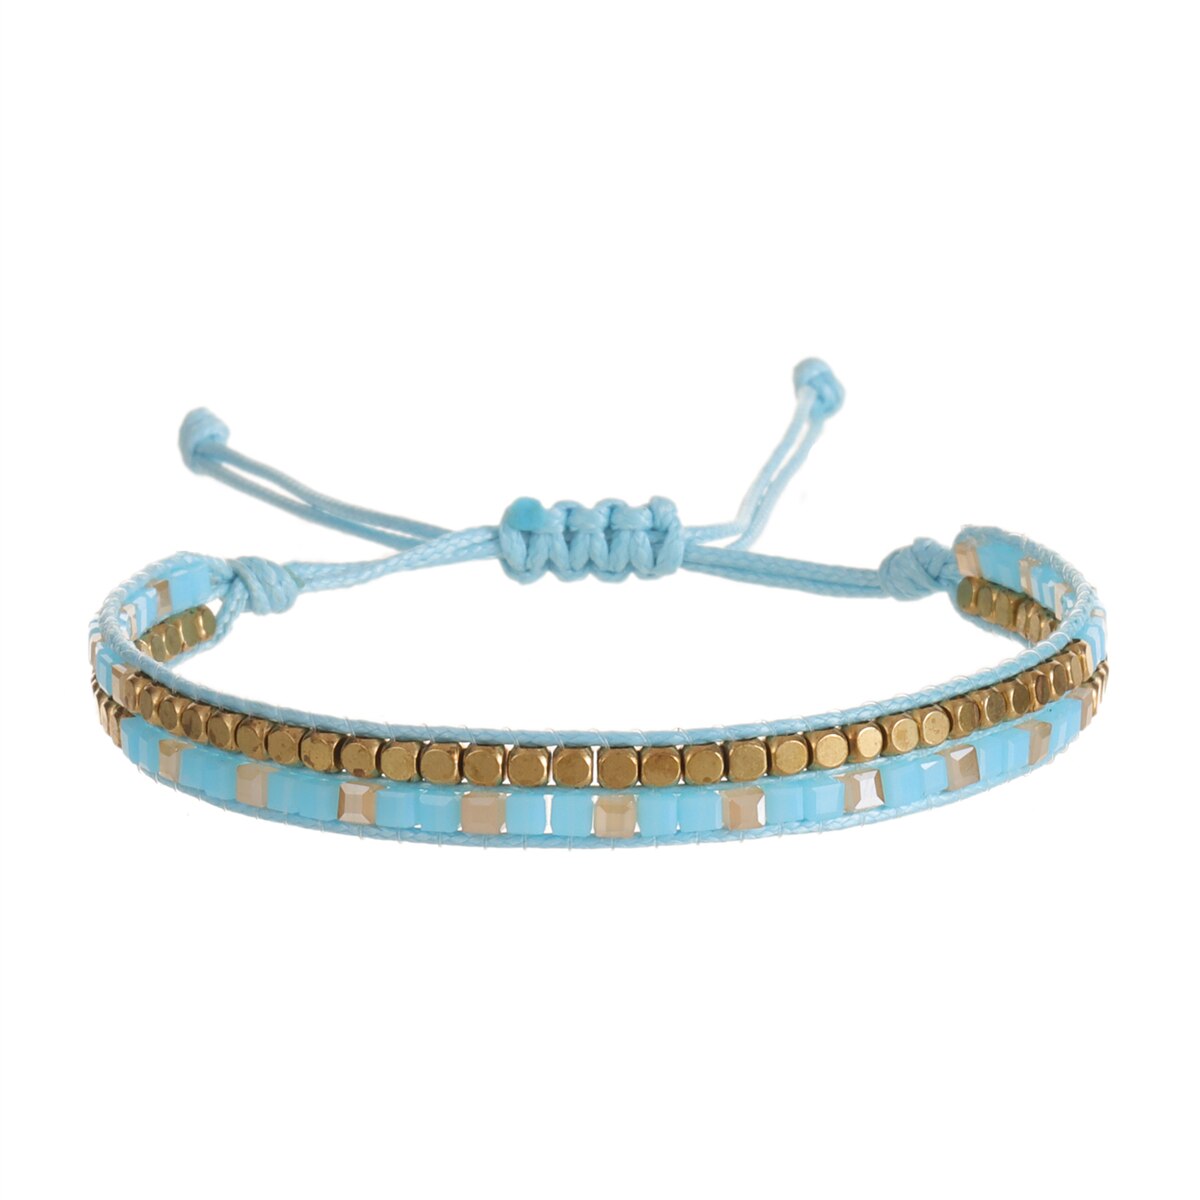 Multilayer Ethnic Glass Beads Adjustable Charm Bracelets Braided Rope Yoga Bracelet for Men Women Wristband Boho Jewelry Gift